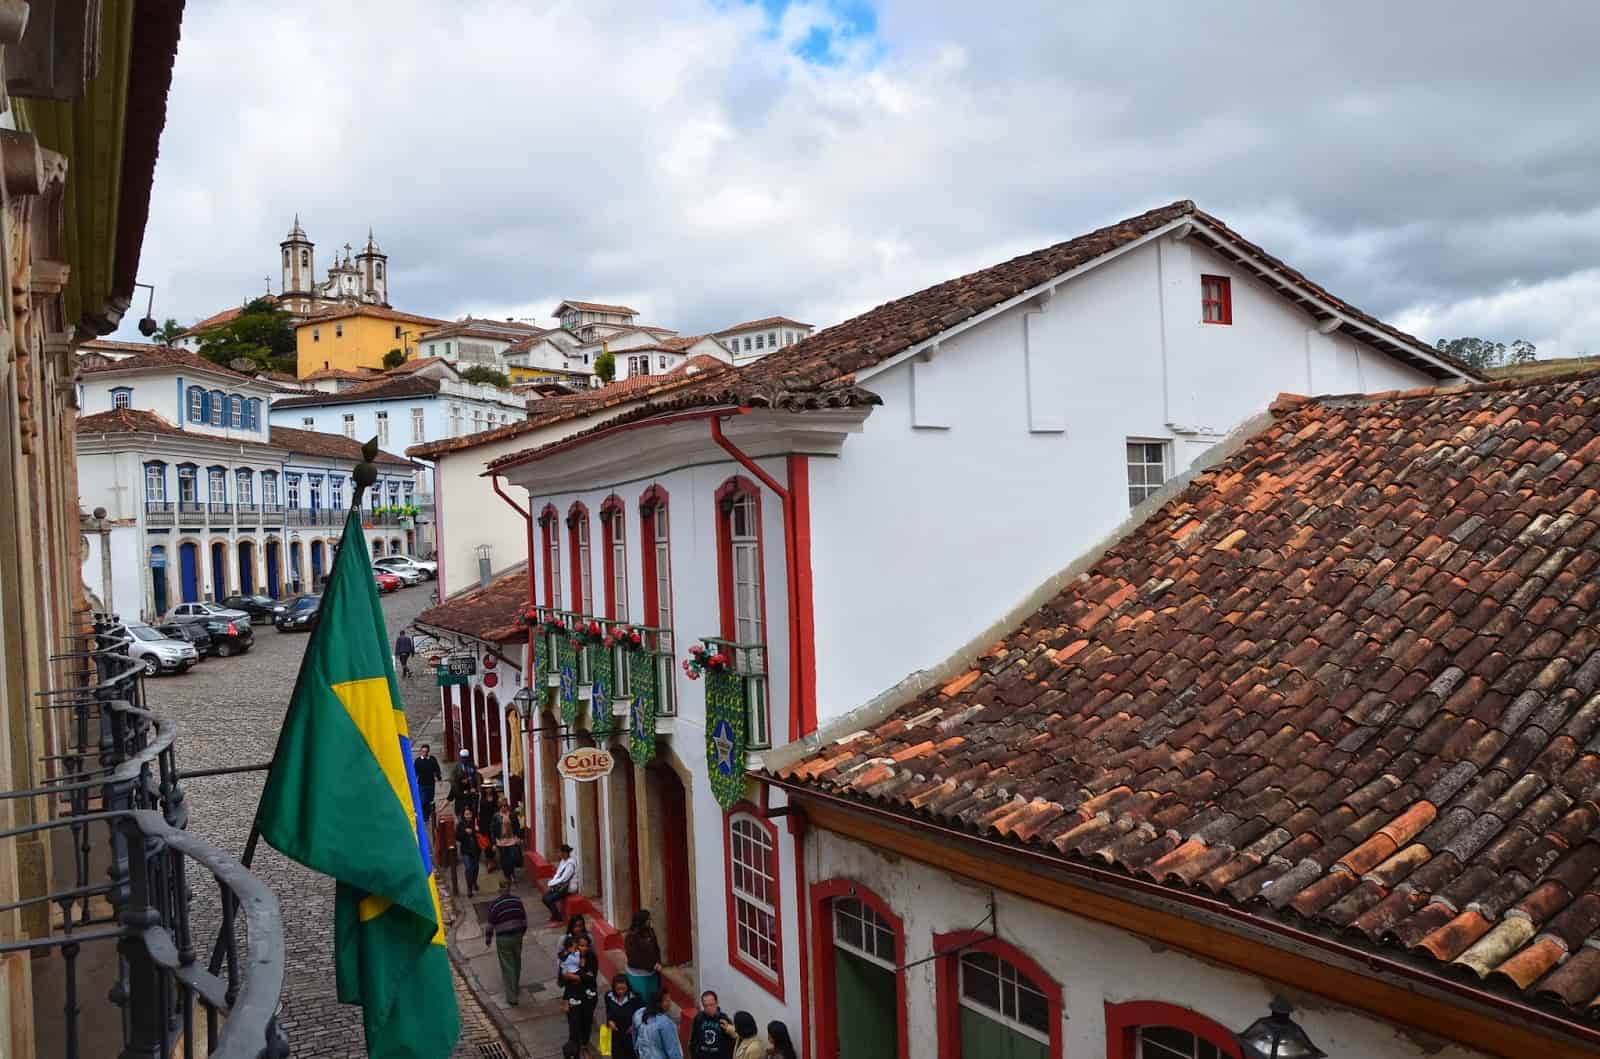 The view from Casa dos Contos in Ouro Preto, Brazil